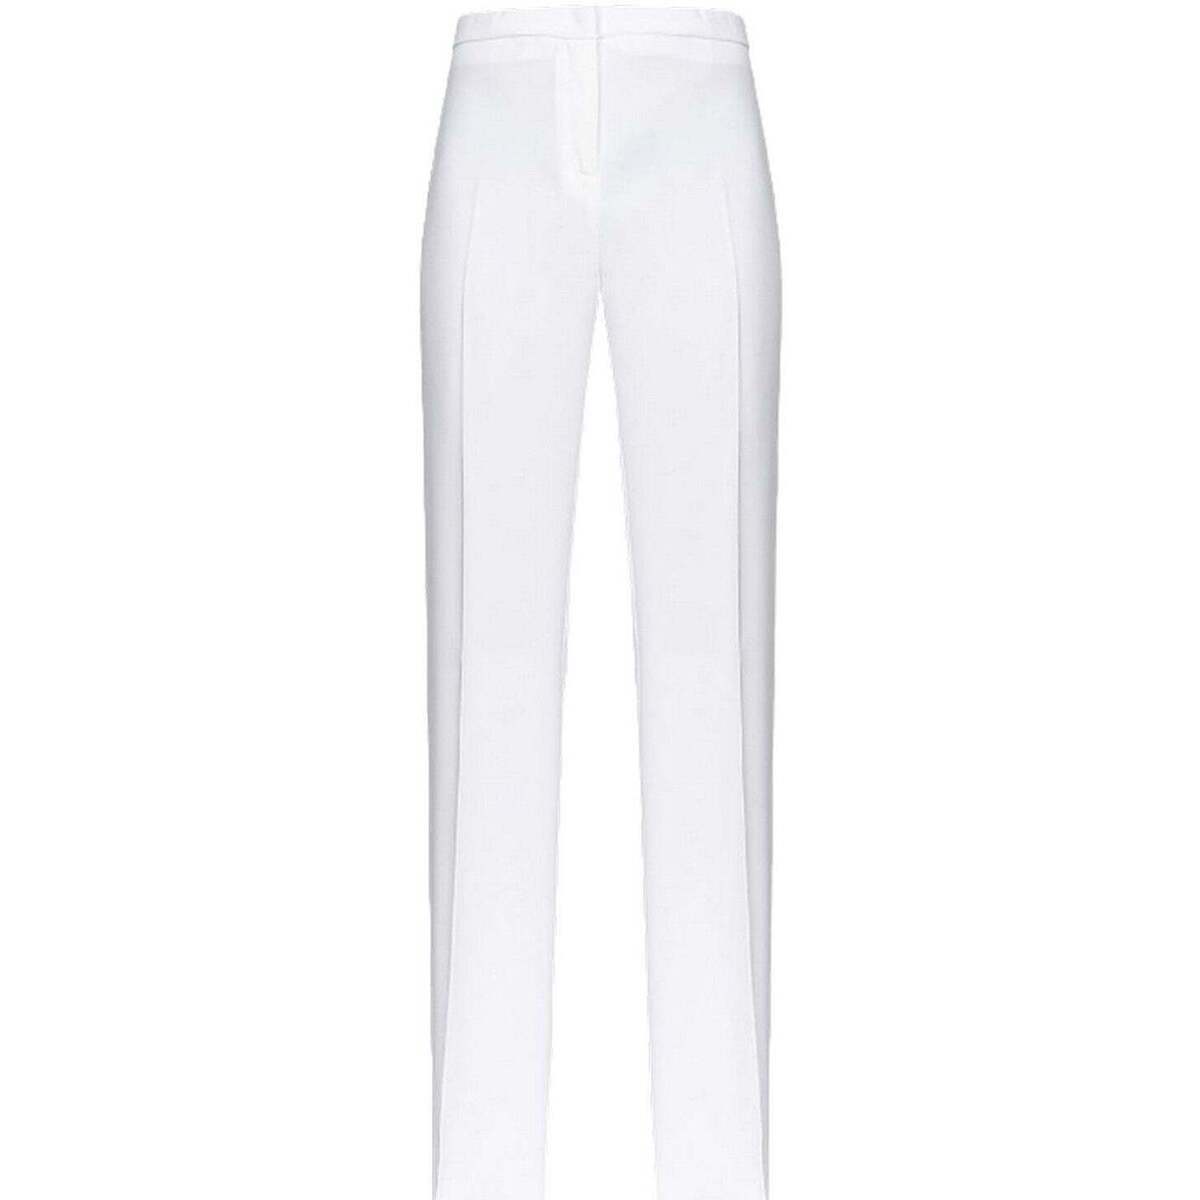 Vêtements Femme Pantalons Pinko  Blanc